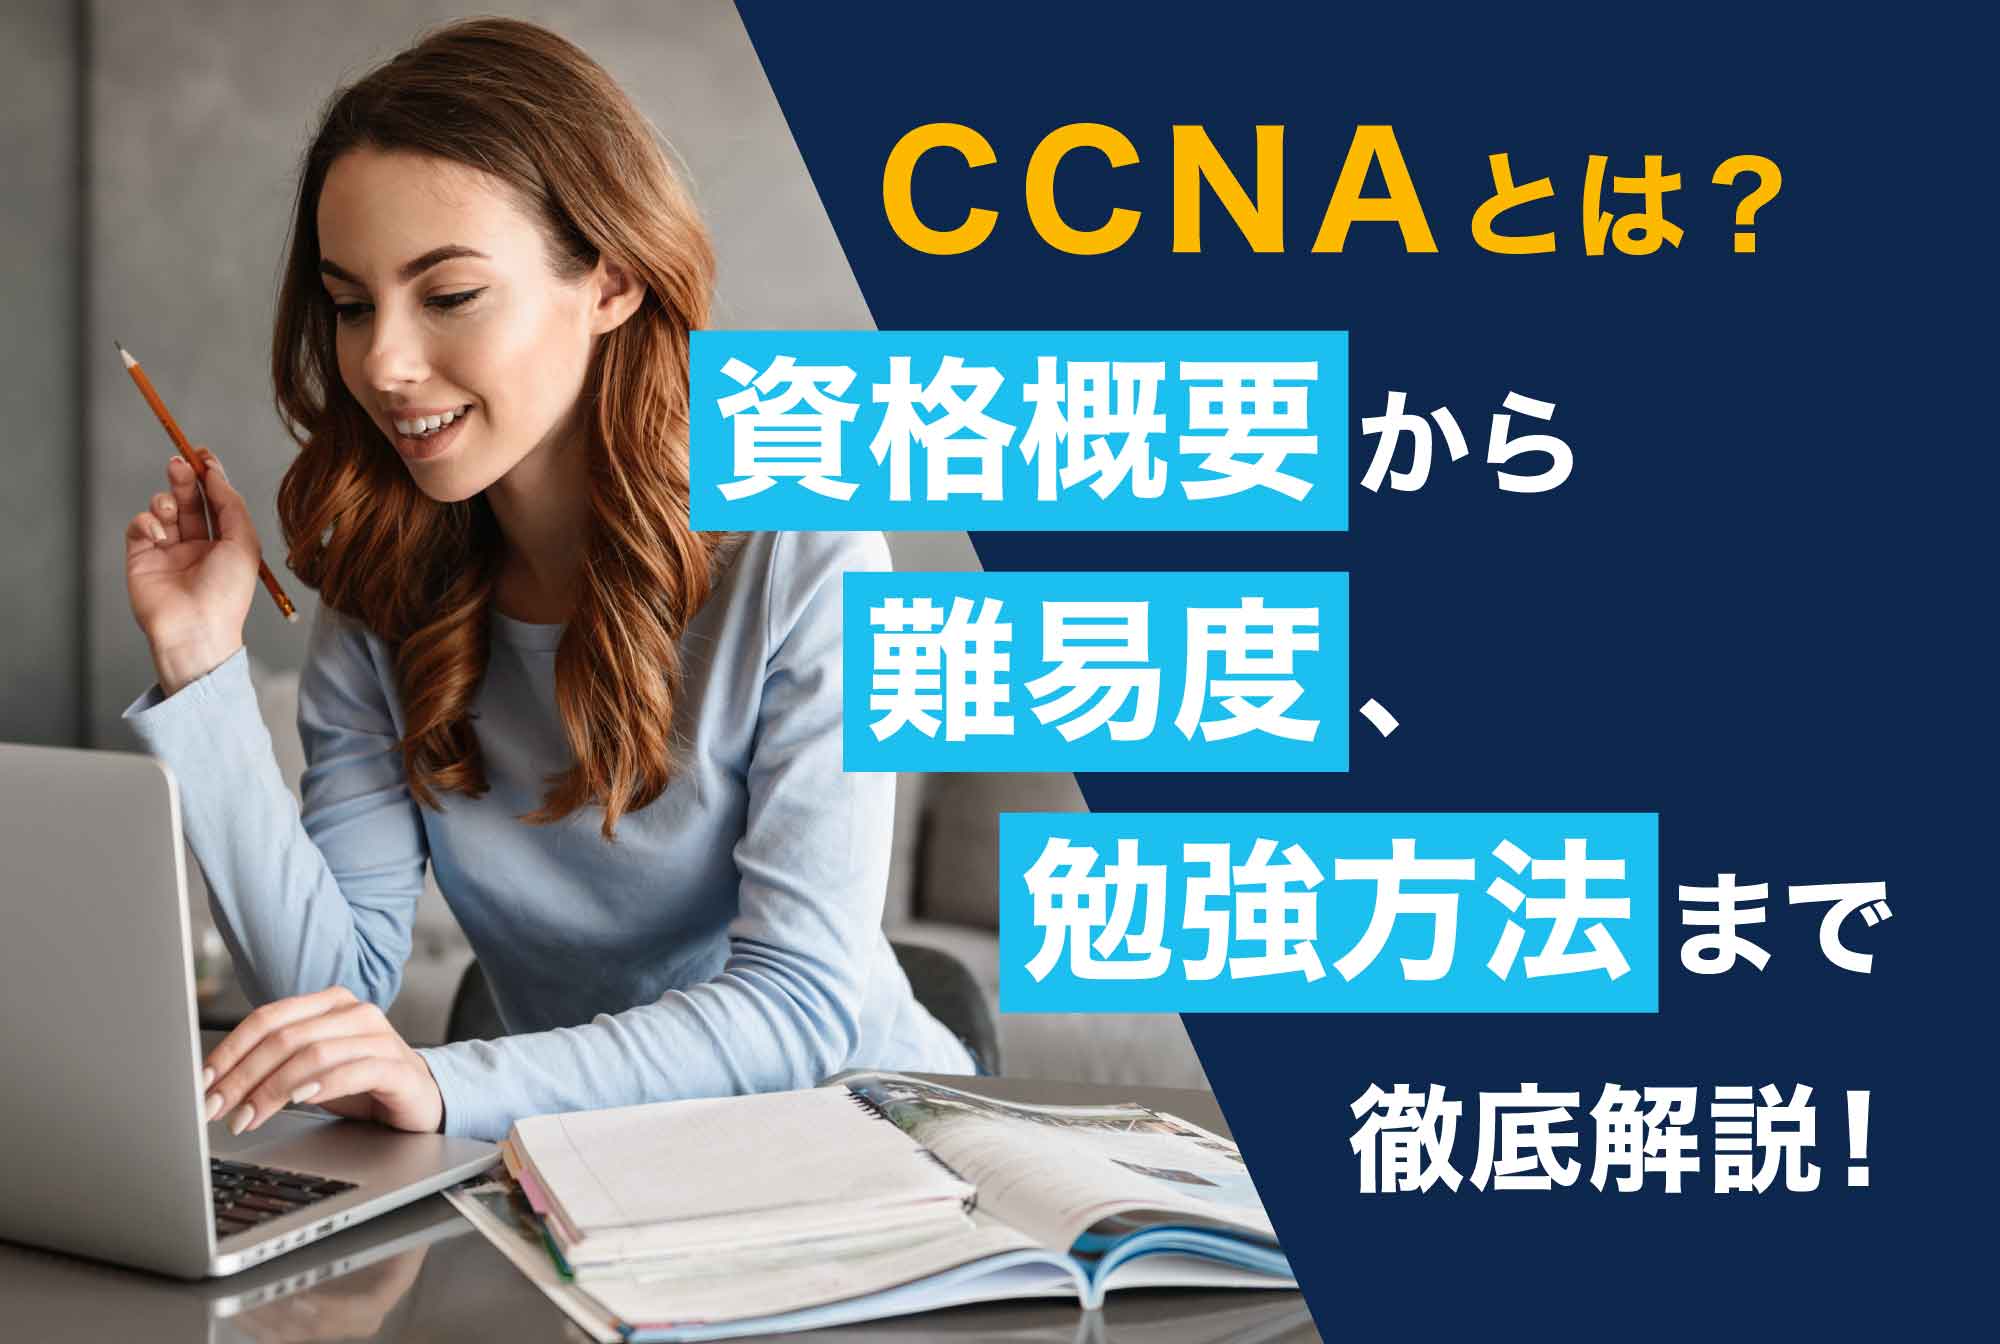 Ccnaの資格概要とは 取得メリットや難易度 勉強方法も現役講師が紹介 第二の就活